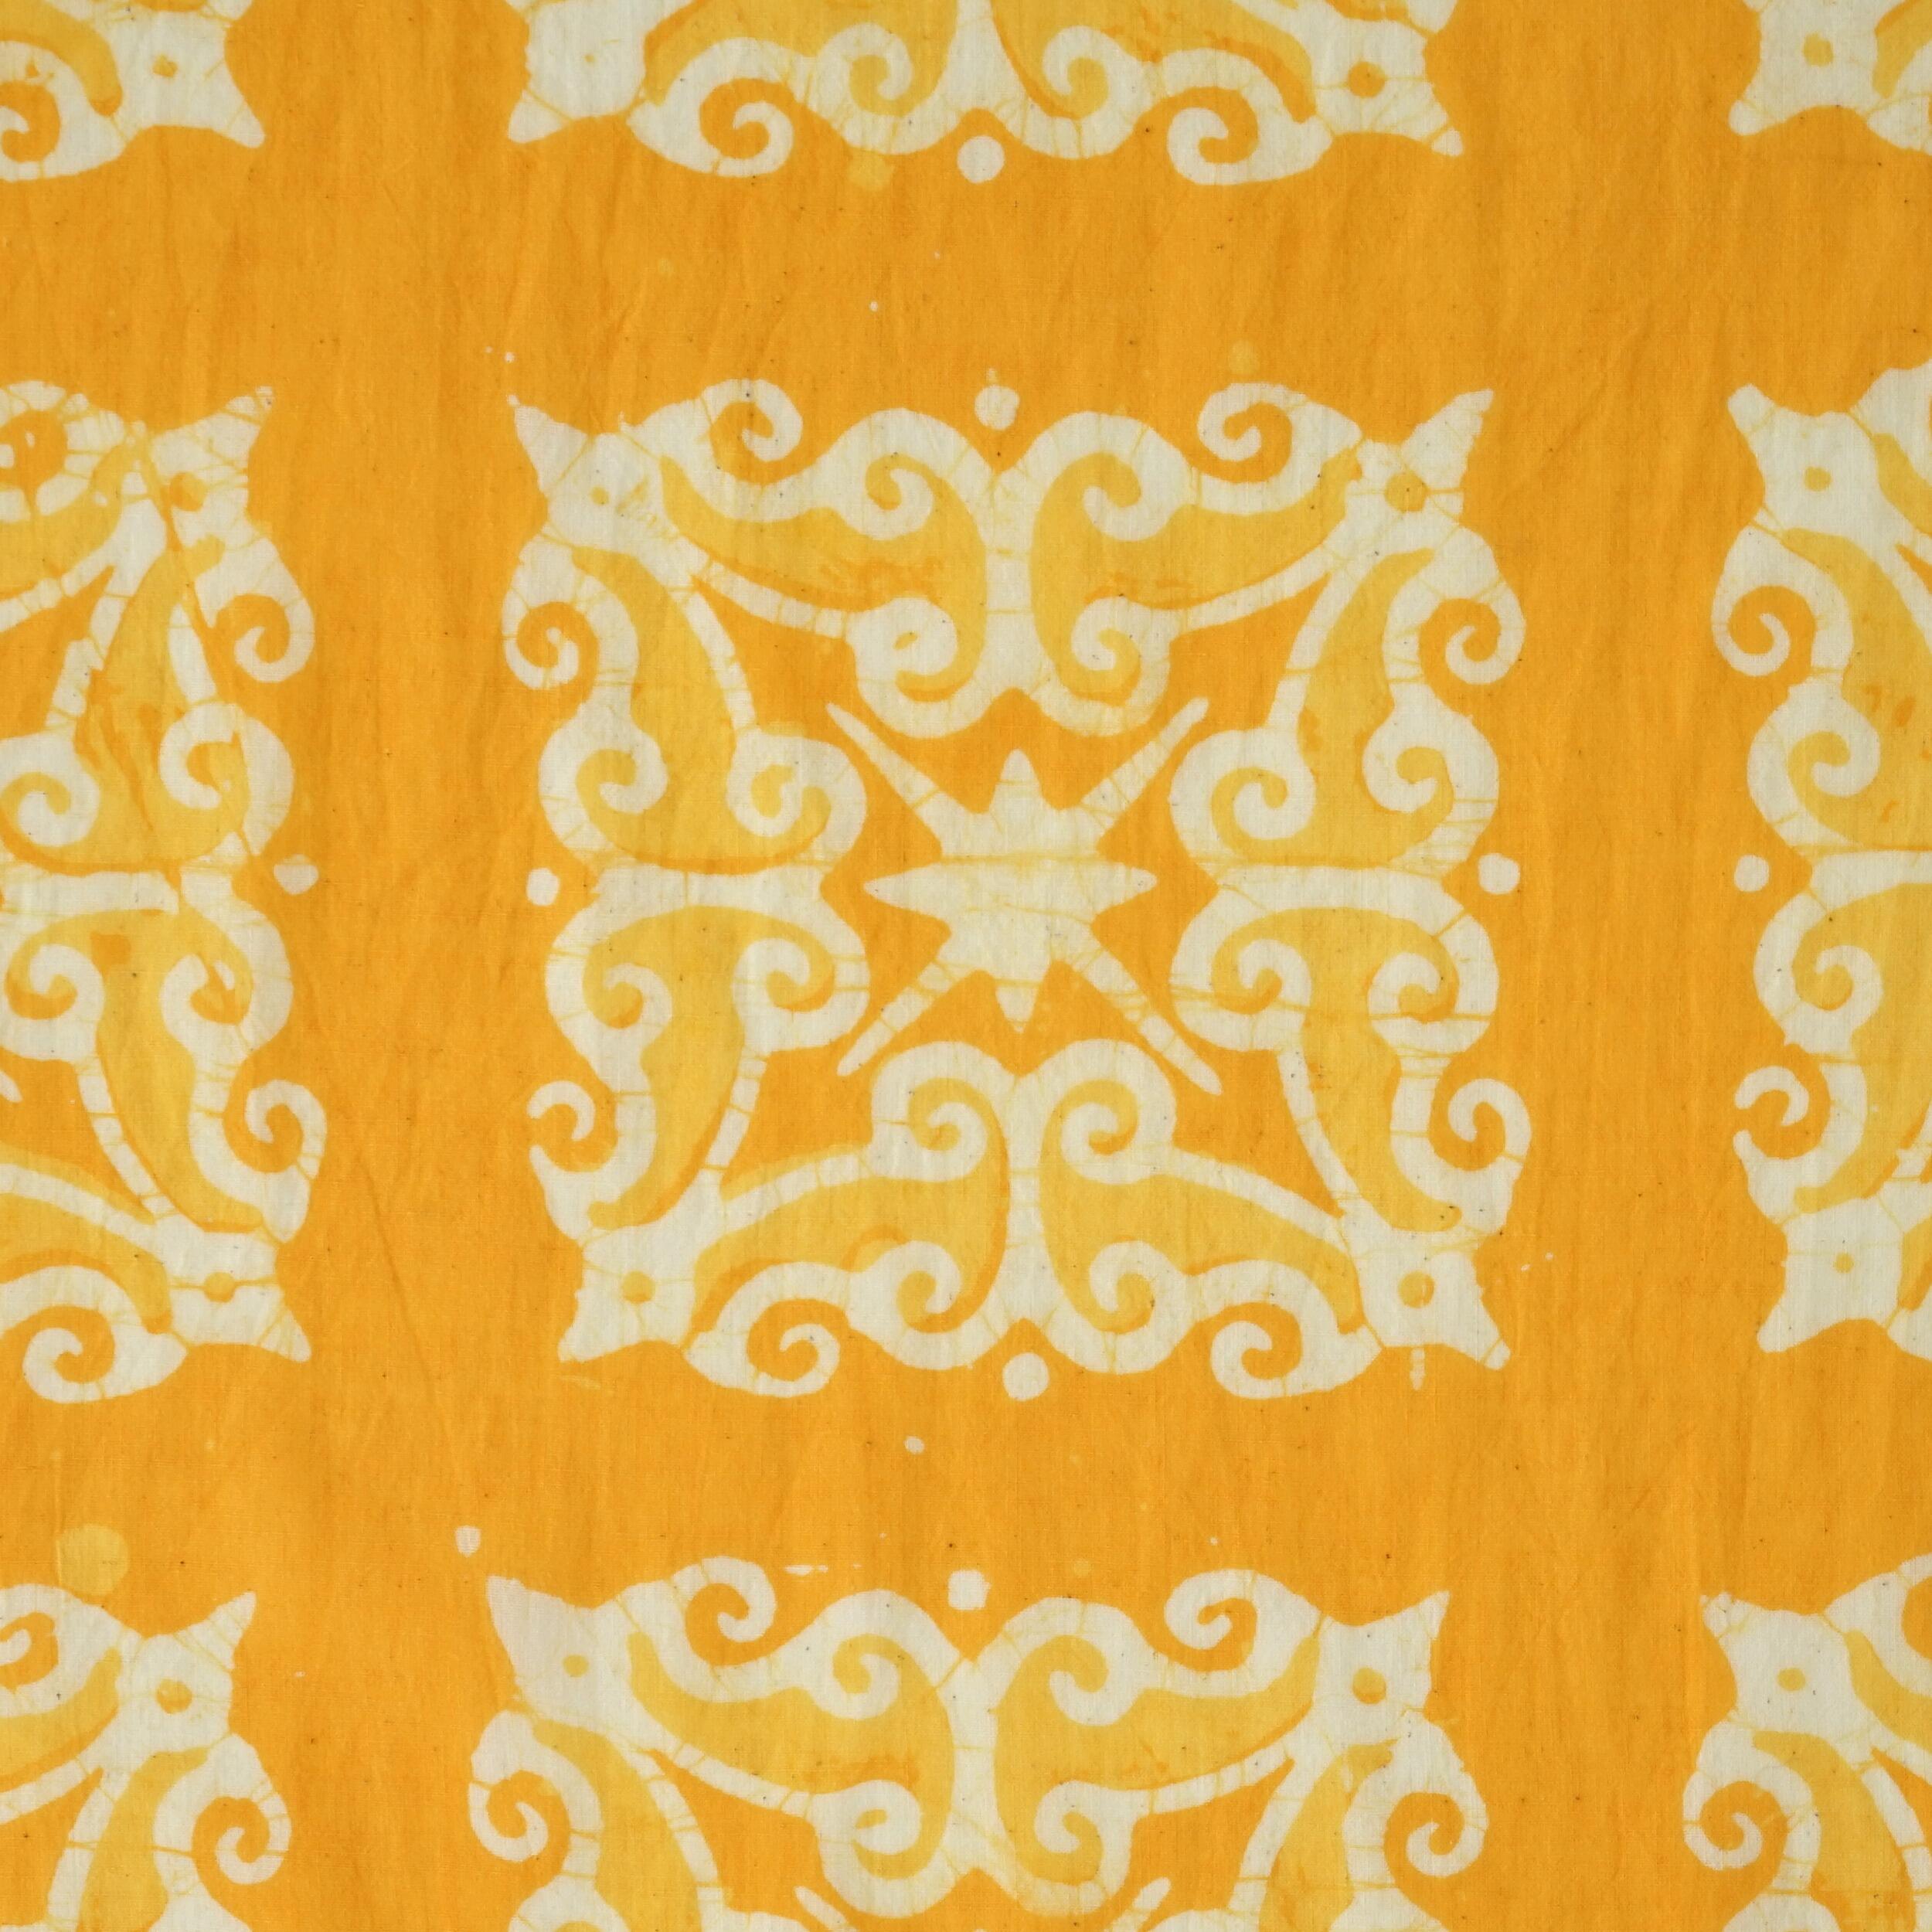 100% Block-Printed Batik Cotton Fabric From India - Sunkissed Design - Yellow Dye - Flat